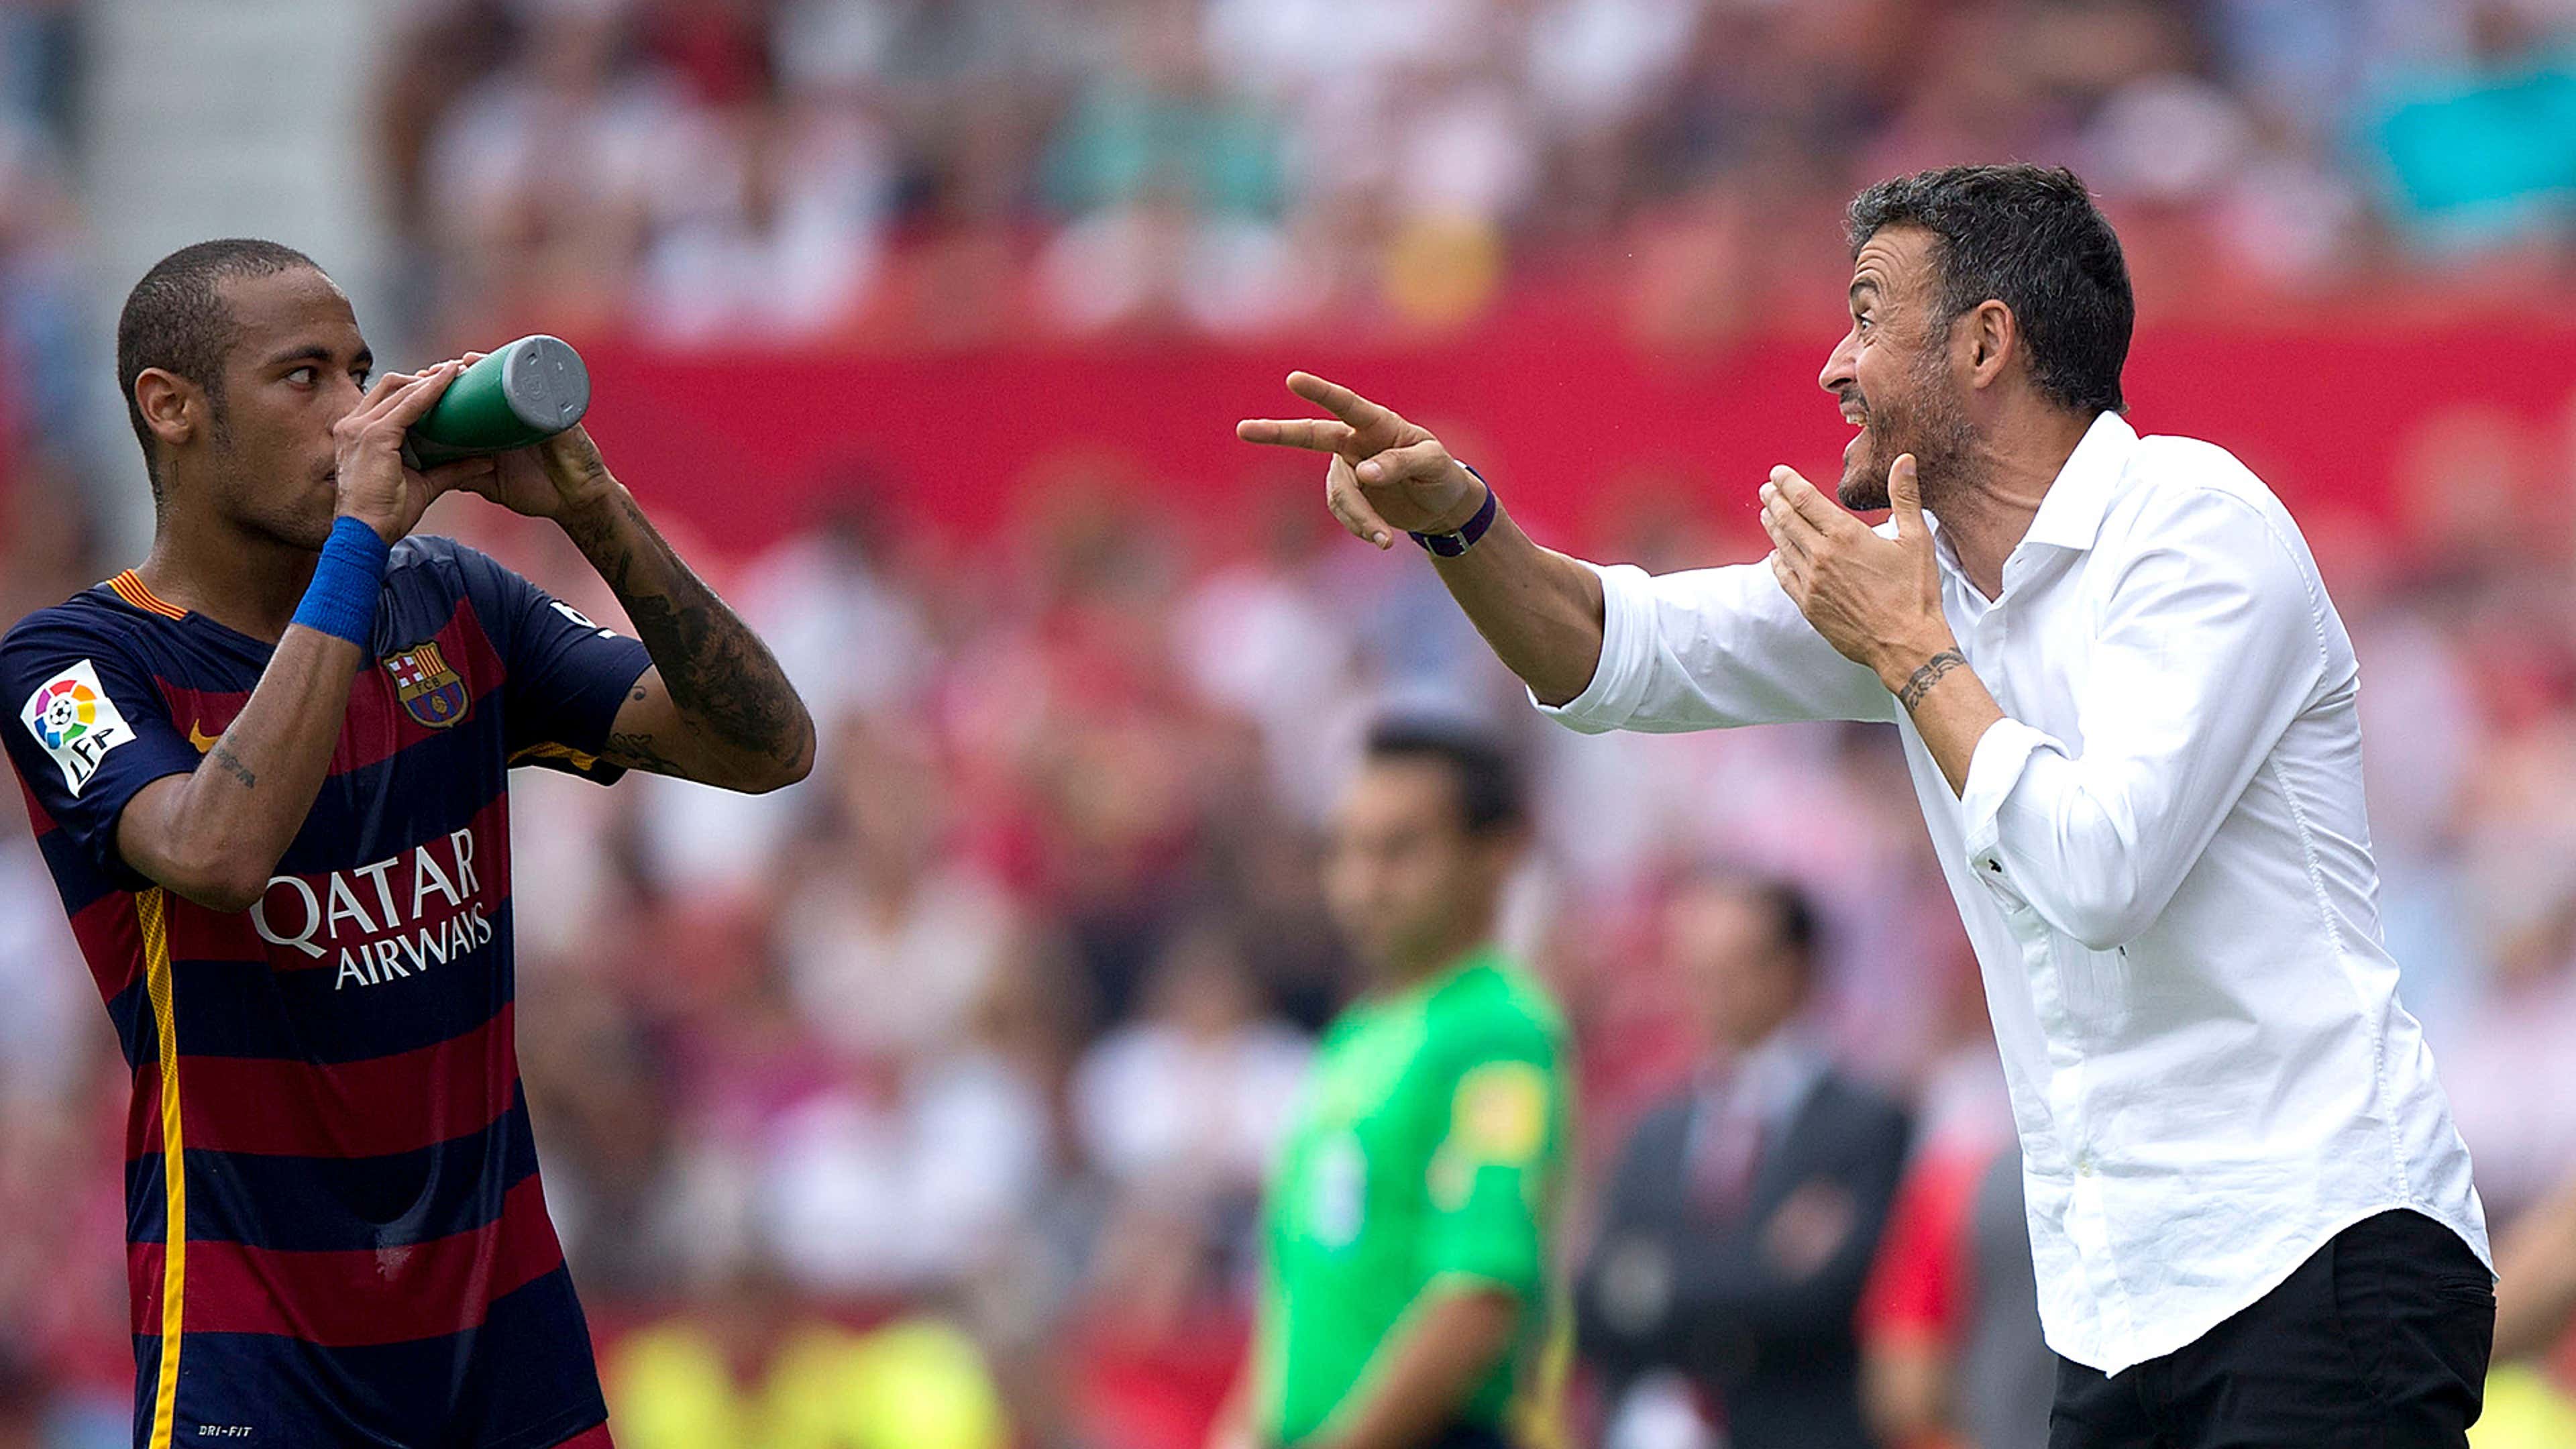 PSG coach Luis Enrique faces tough challenge, with uncertainty over Mbappe  and Neymar